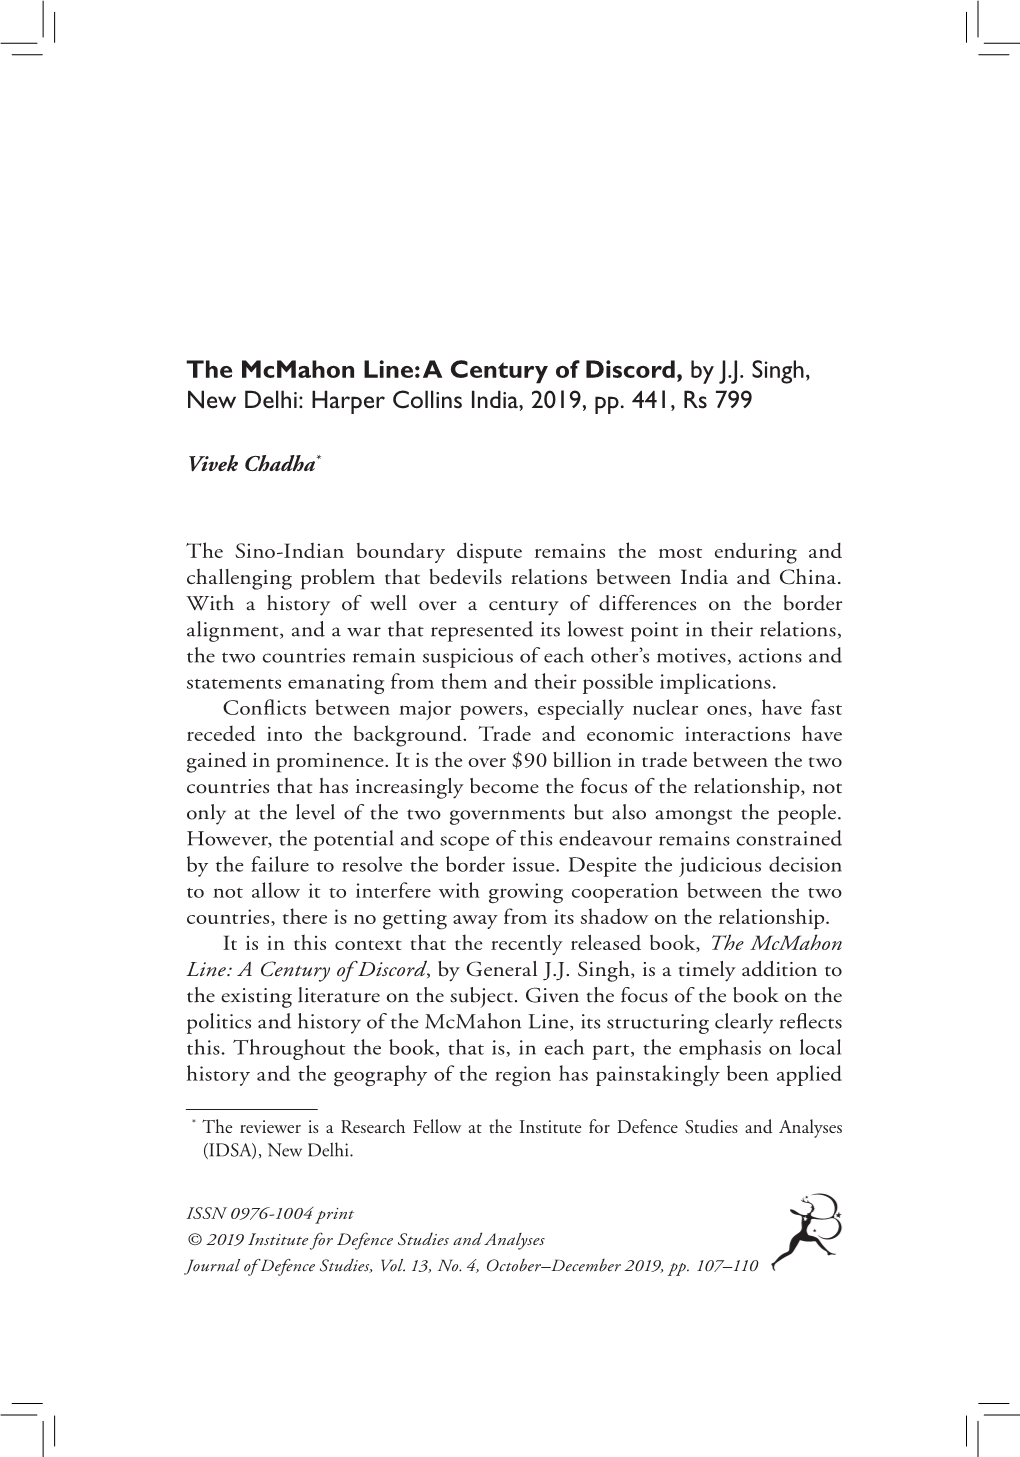 The Mcmahon Line: a Century of Discord, by J.J. Singh, New Delhi: Harper Collins India, 2019, Pp